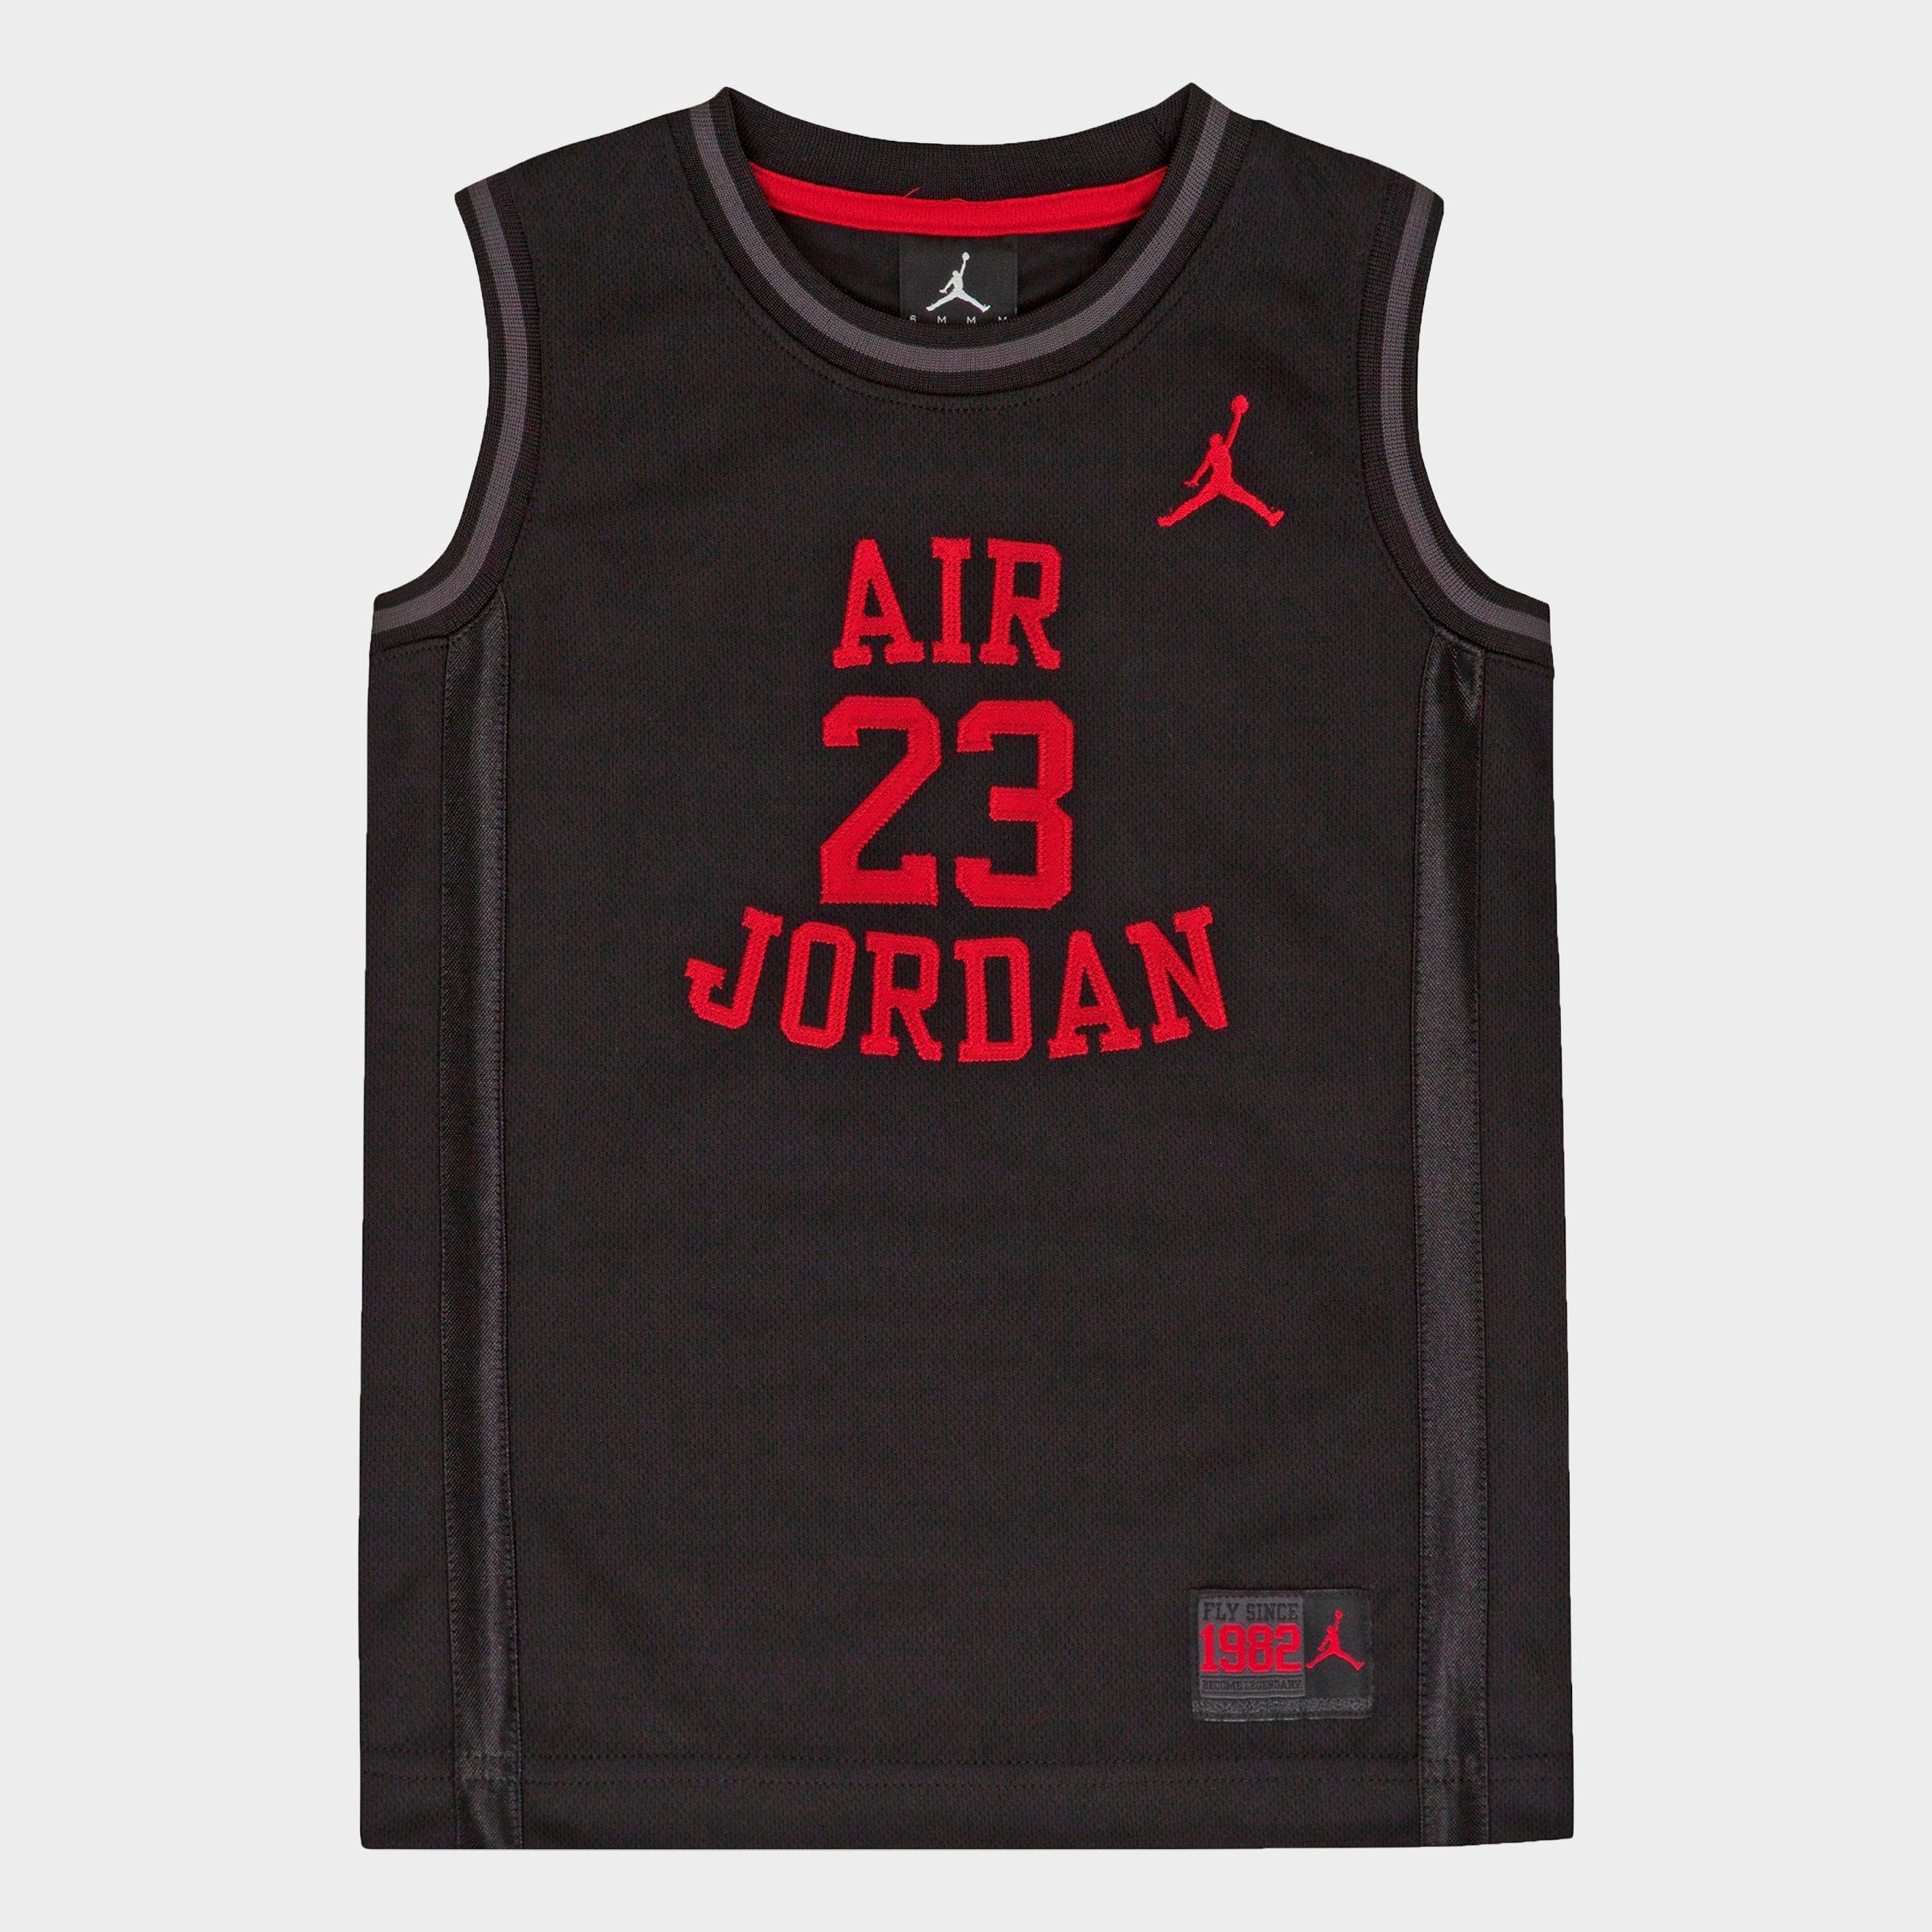 Jordan Classic Mesh Basketball Jersey 